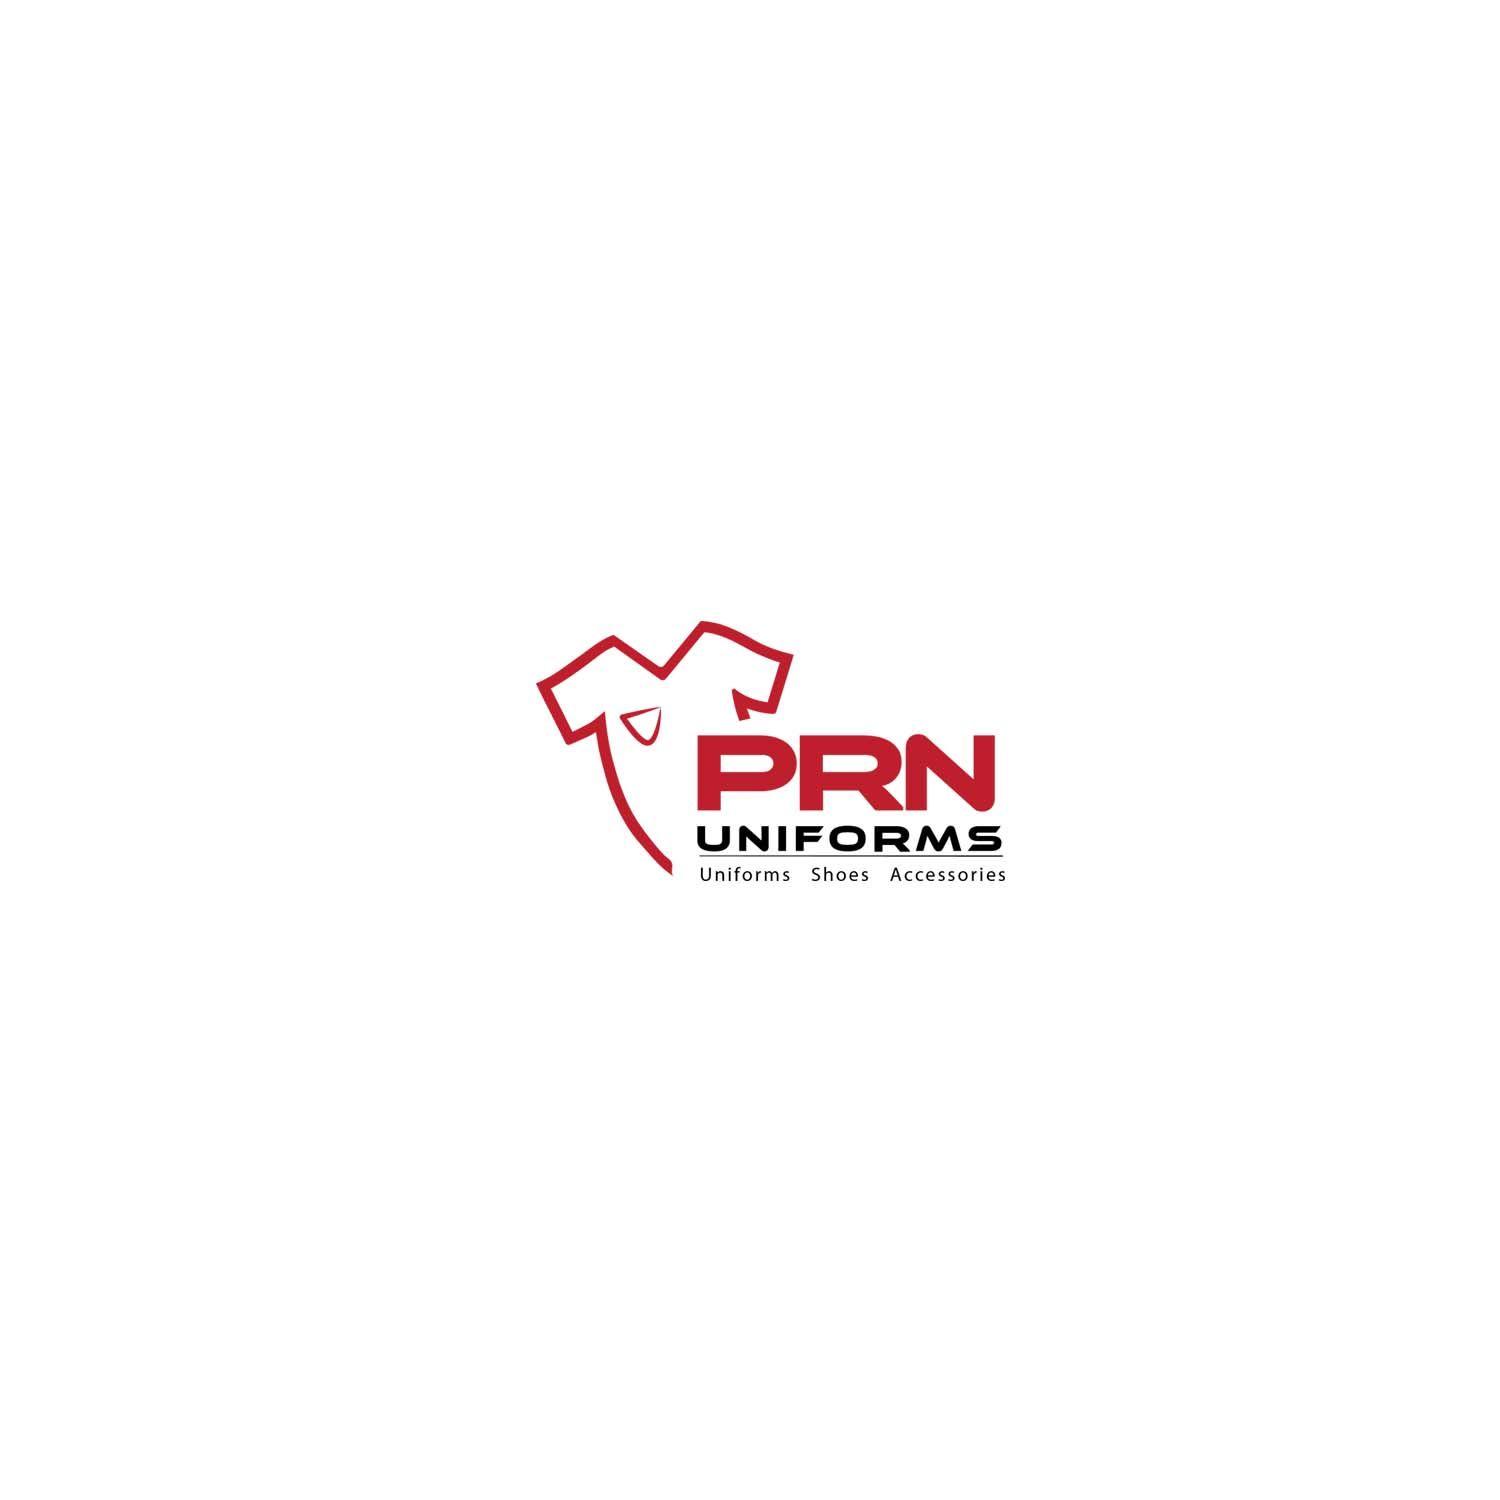 Uniform Logo - Professional, Upmarket, Retail Logo Design for PRN Uniforms Uniforms